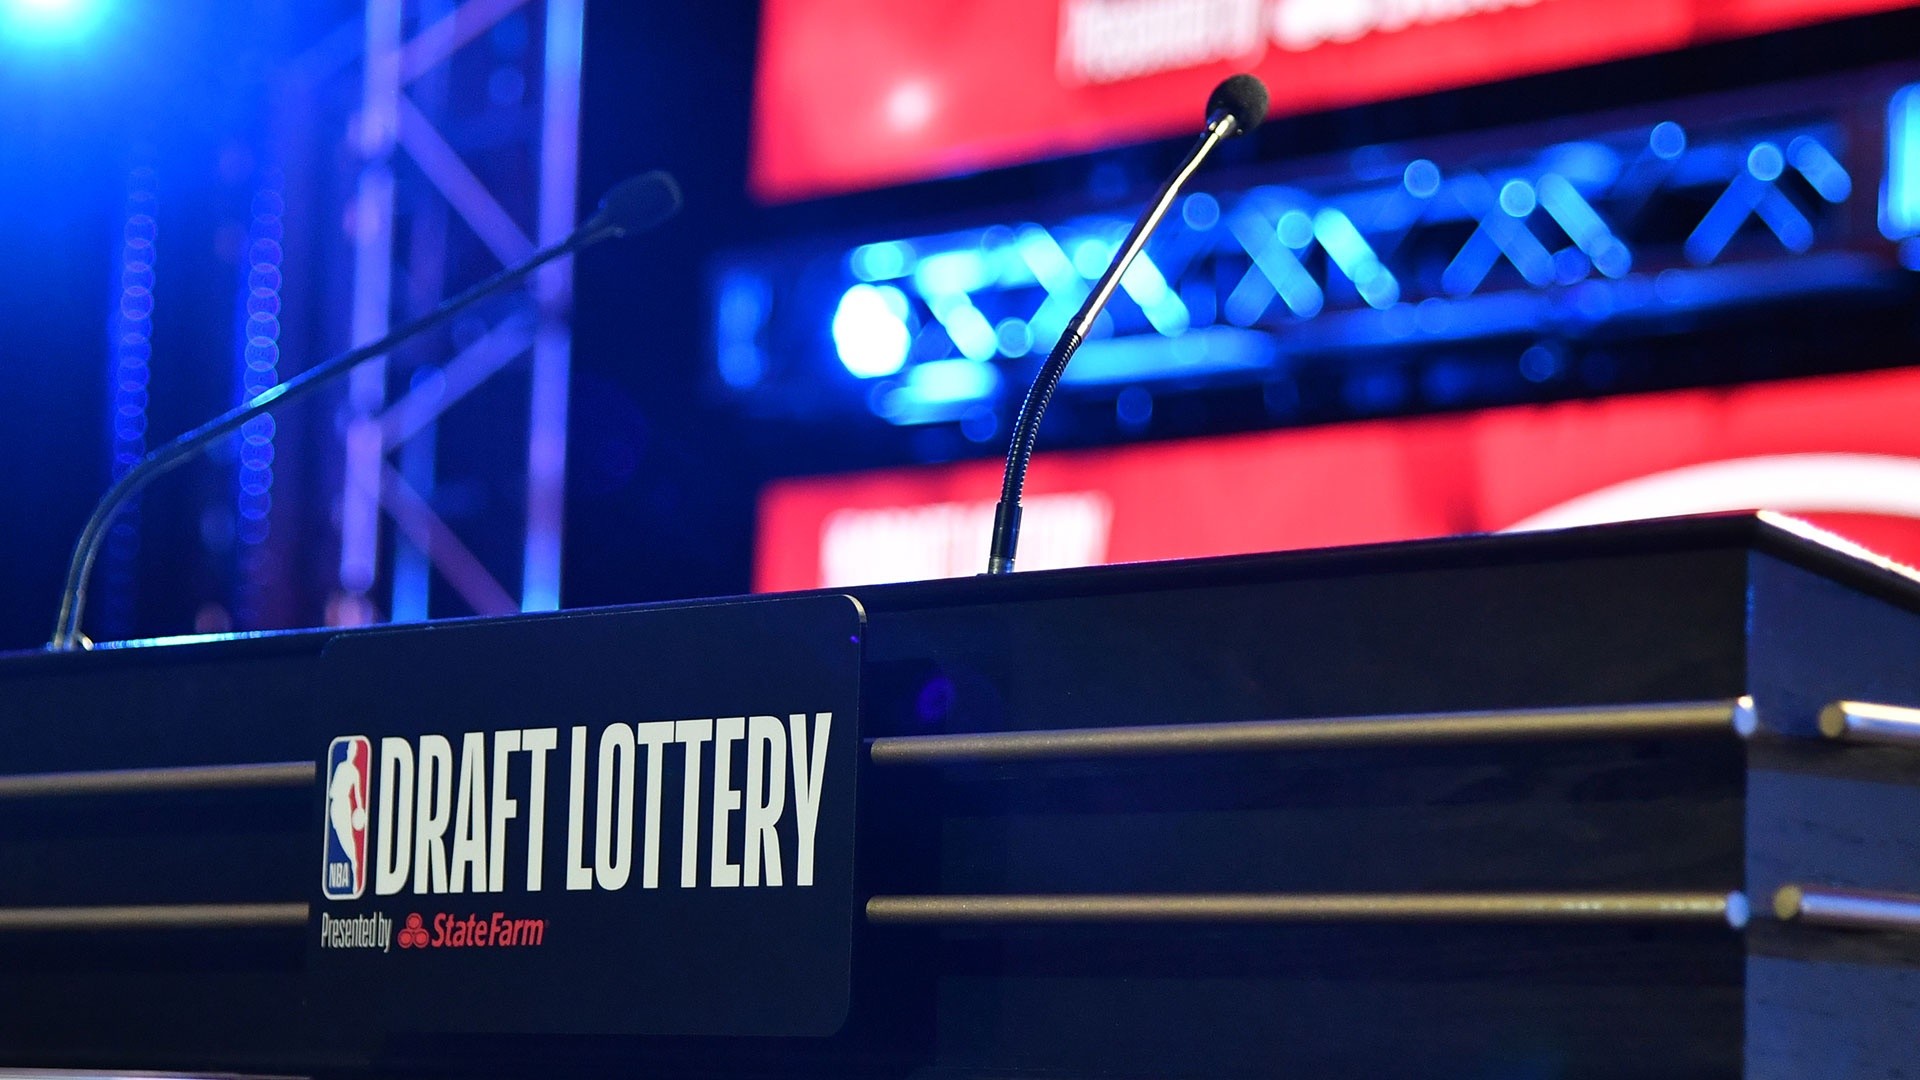 NBA draft lottery 2022: Orlando Magic get the No. 1 pick - Los Angeles Times